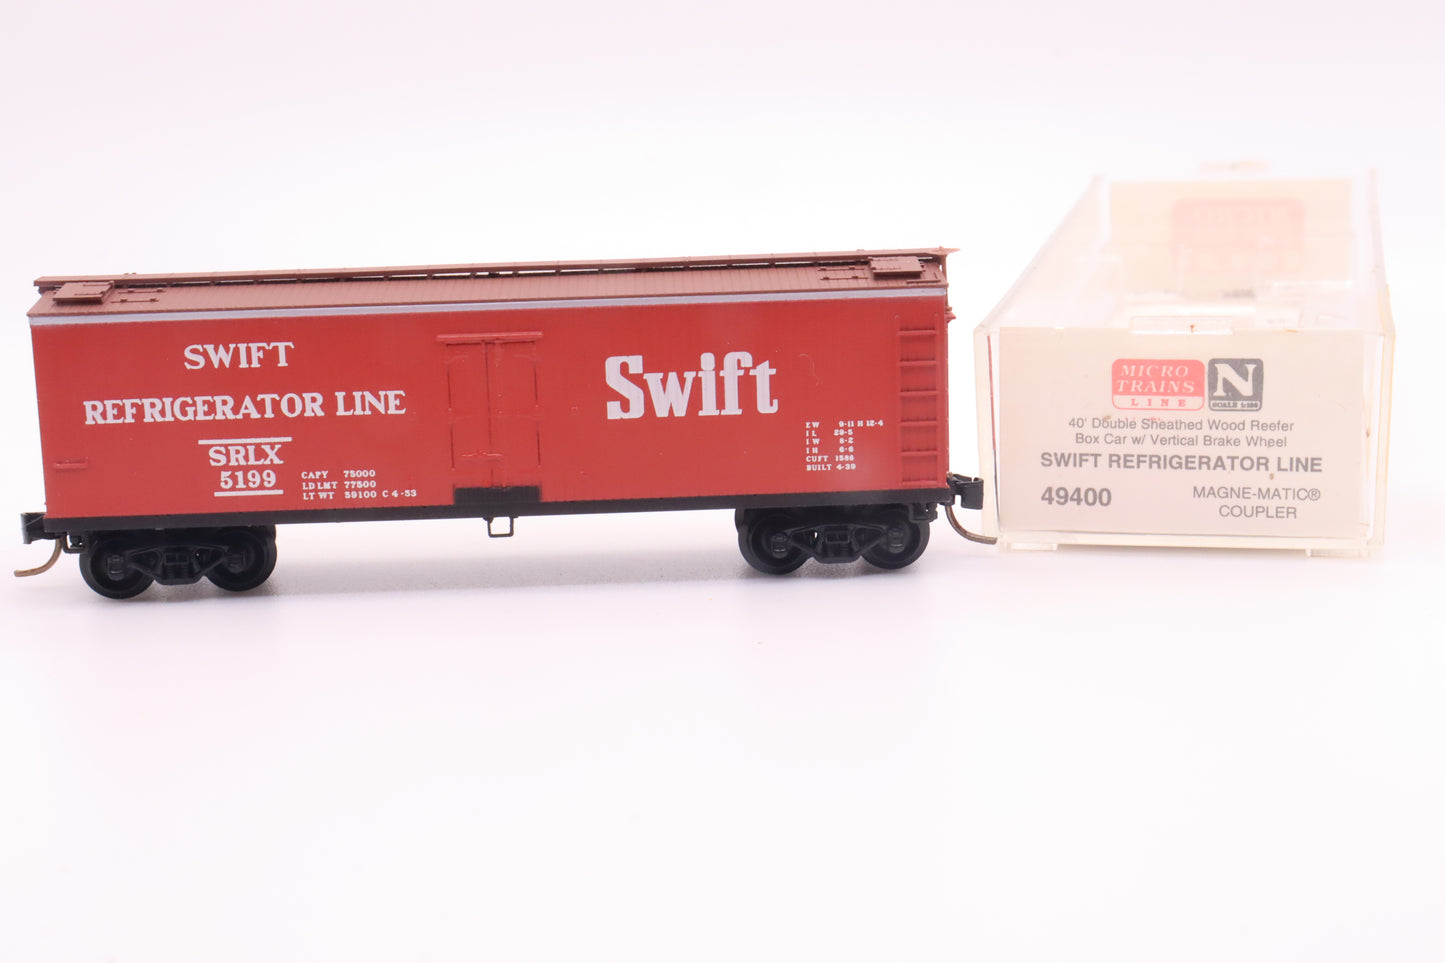 MTL-49400 - 40' Double Sheathed Wood Reefer Box Car w/Vertical Brake Wheel - Swift Refrigerator Line - SRLX-5199